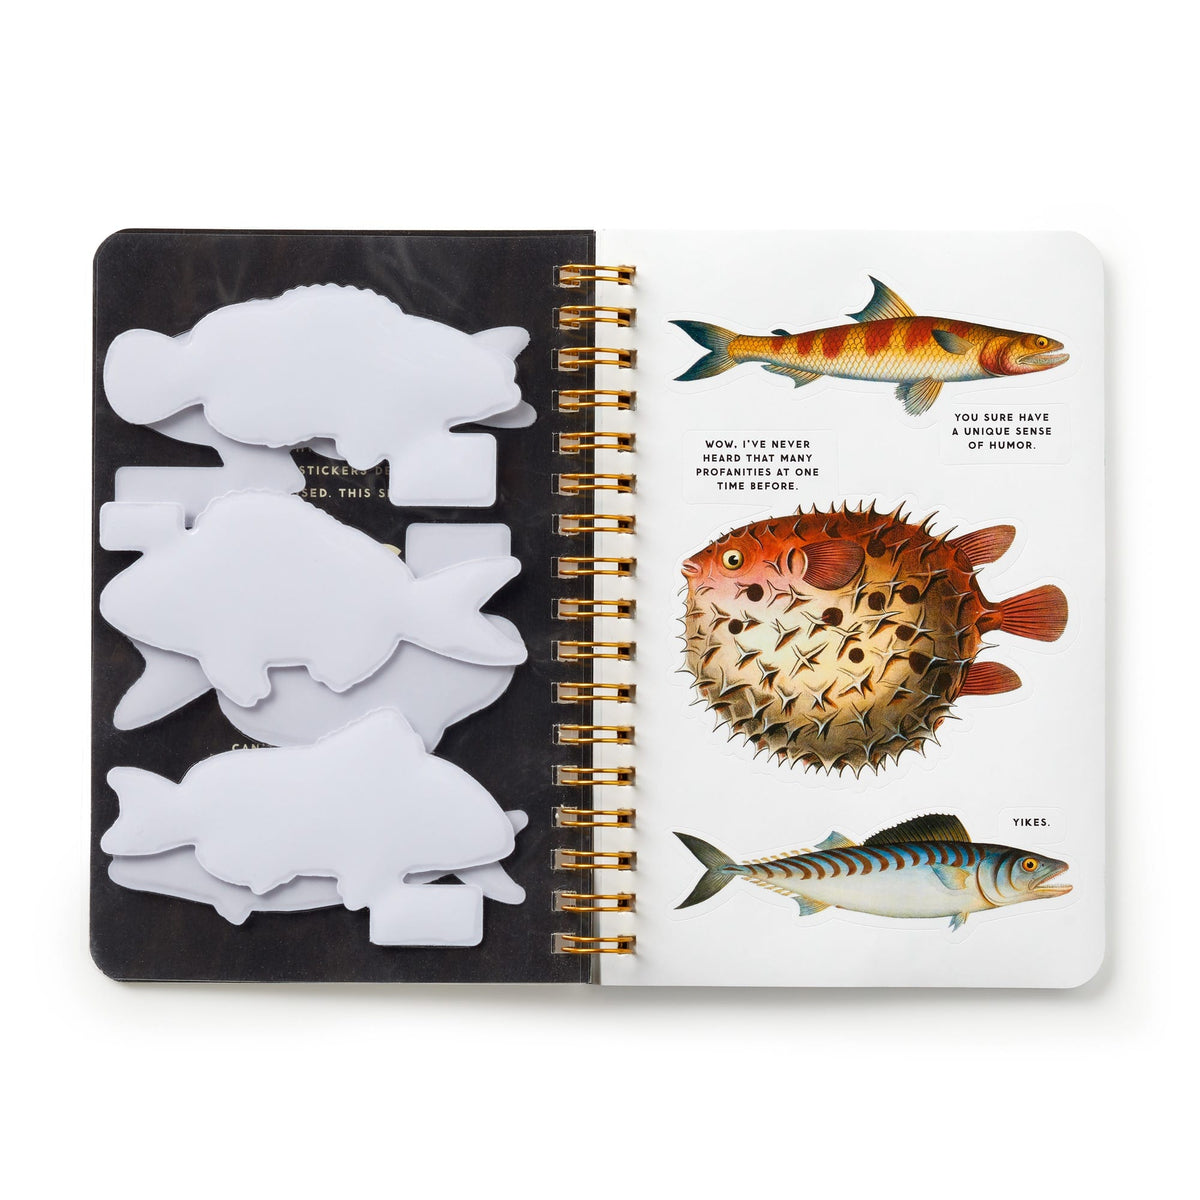 Judgy Fish Sticker Book [Book]